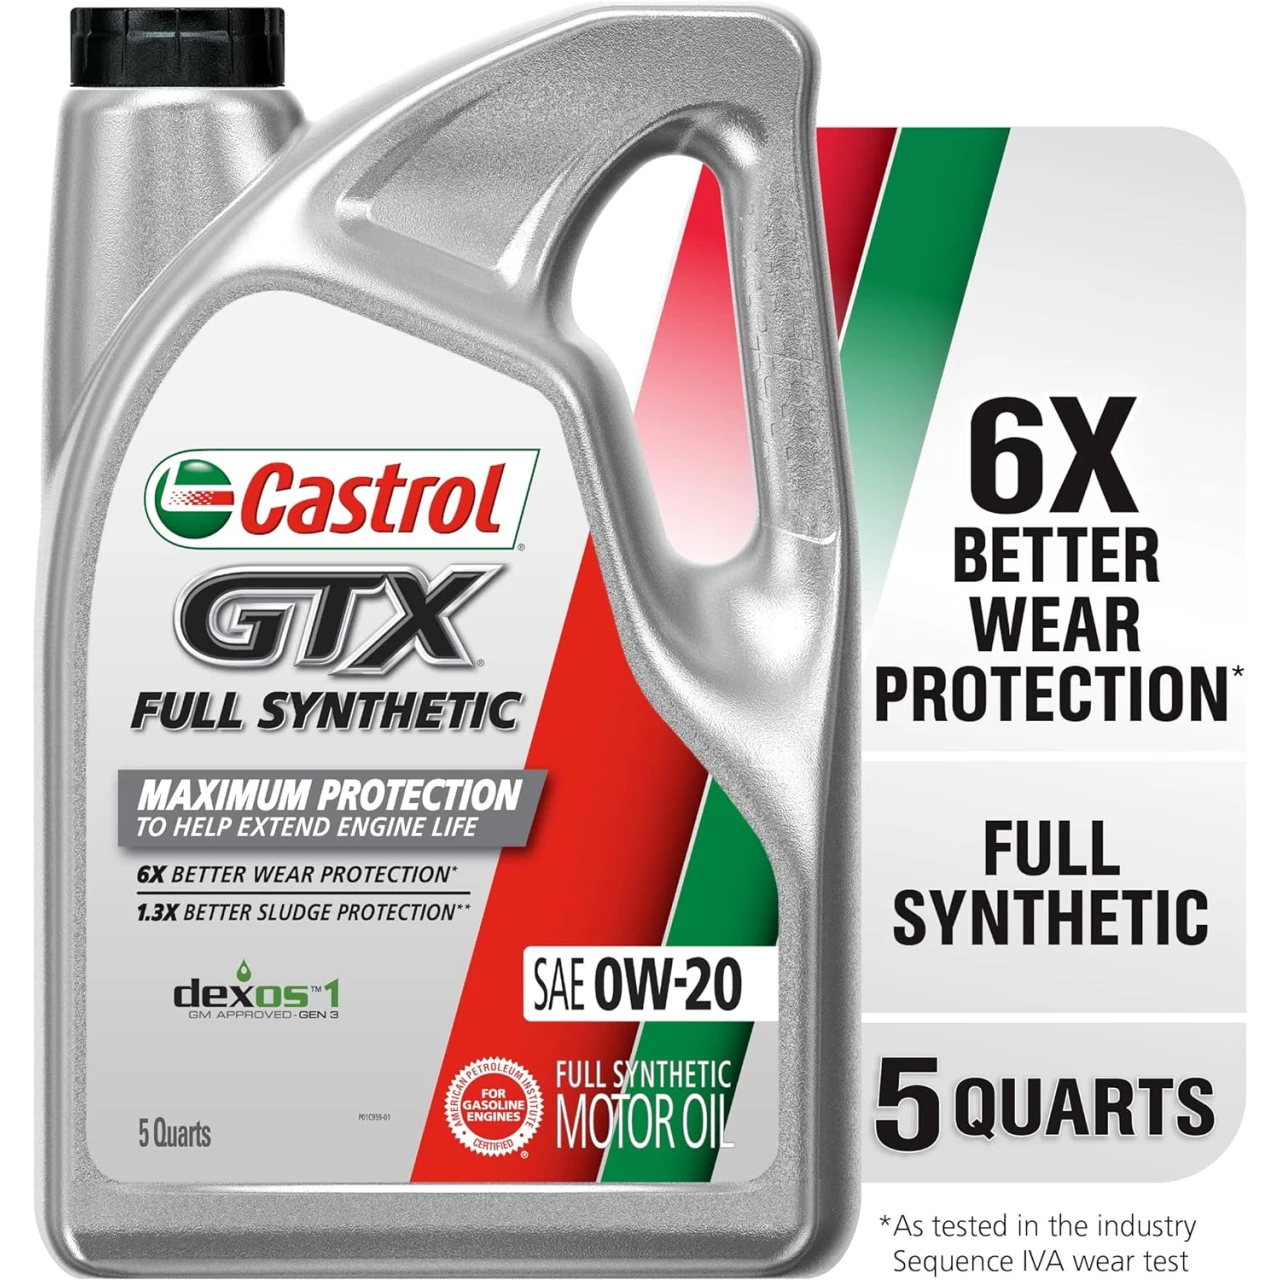 Castrol 15E725 GTX Full Synthetic 0W-20 Motor Oil, 5 Quarts